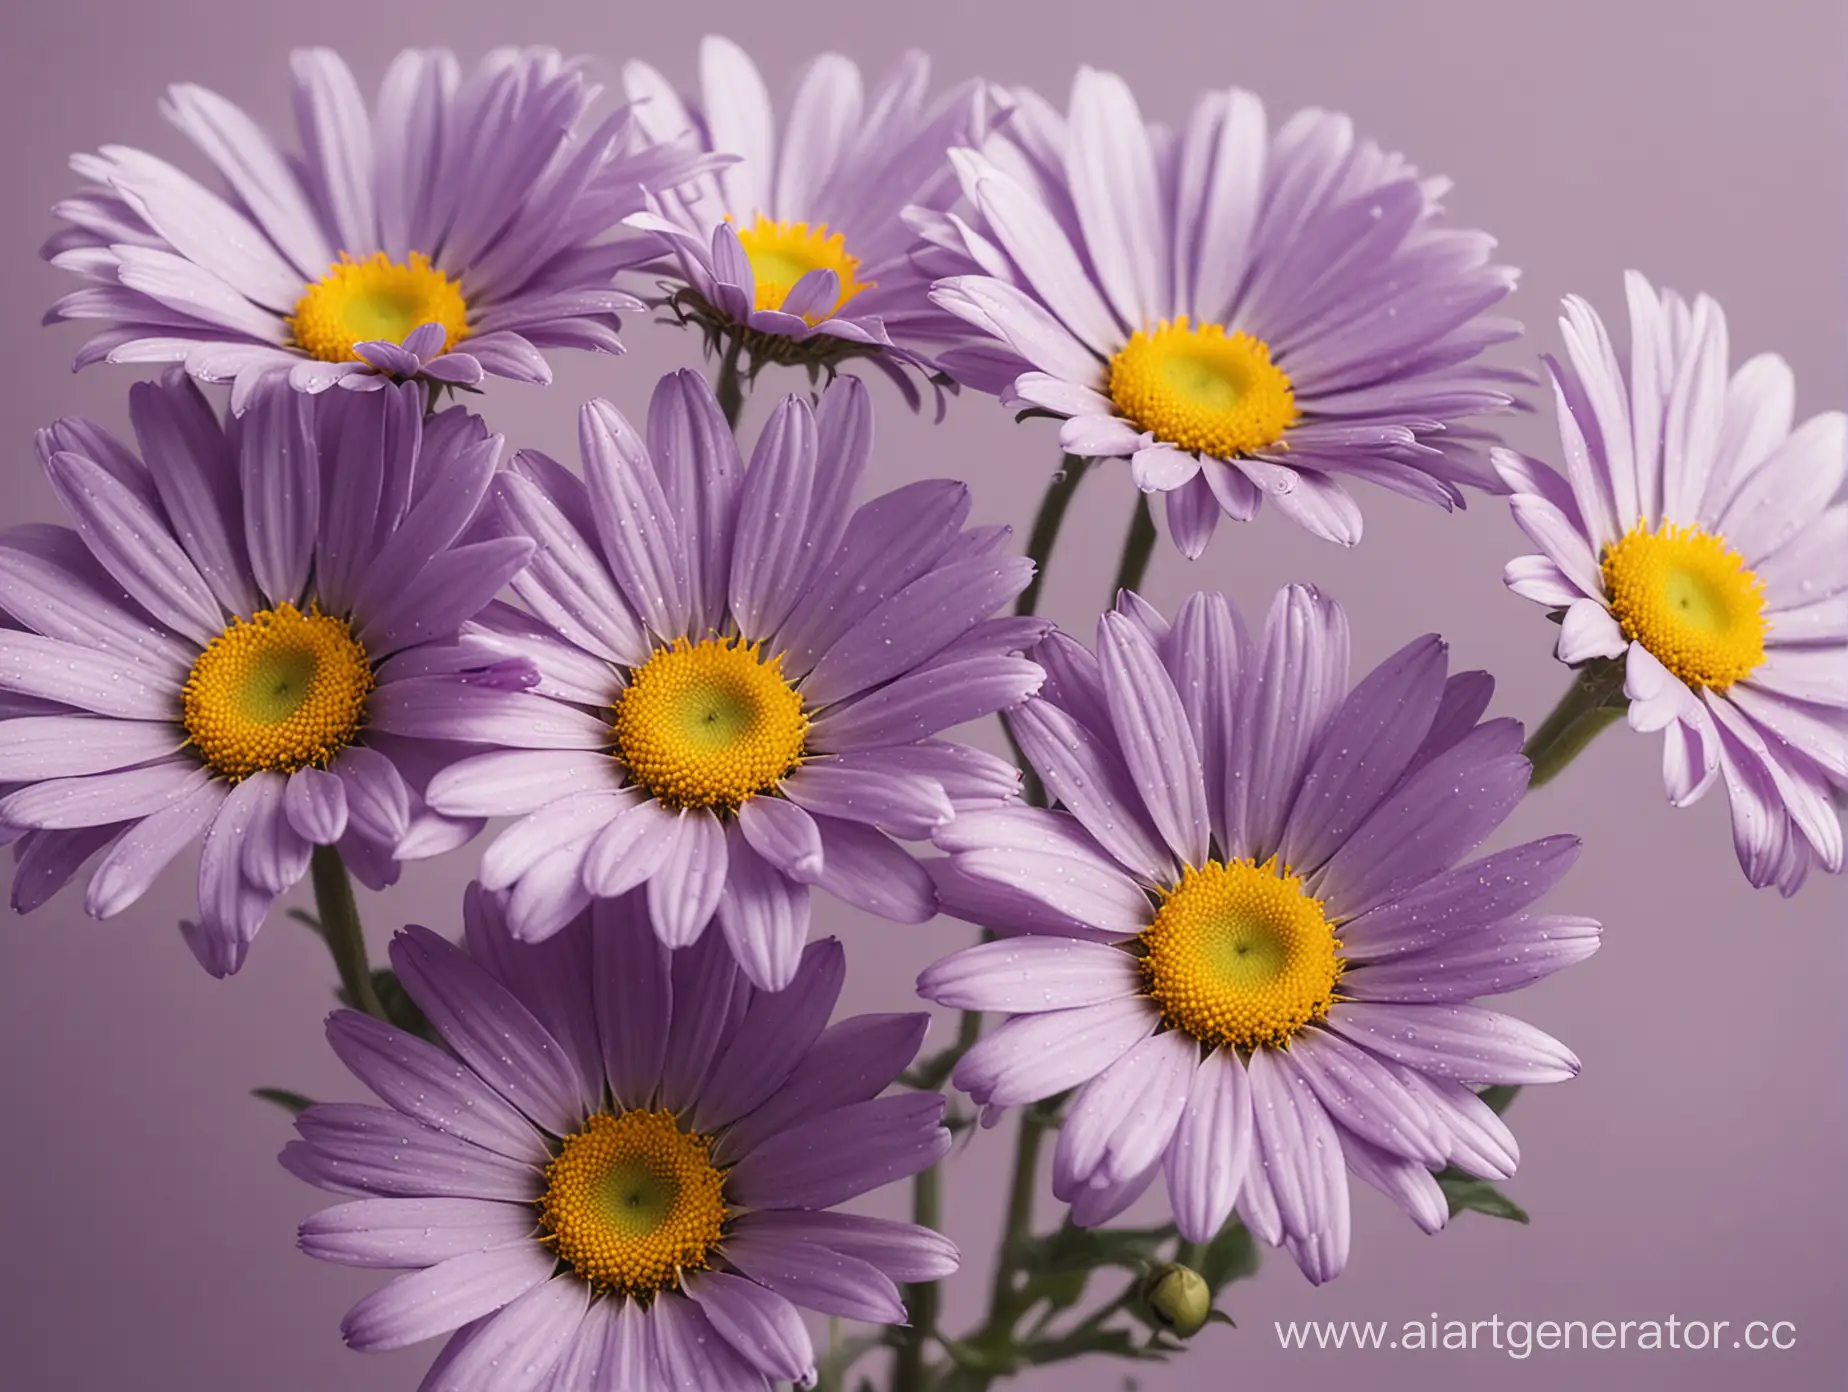 Closeup-Image-of-Dark-Purple-DaisyLike-Flowers-with-Yellow-Pistils